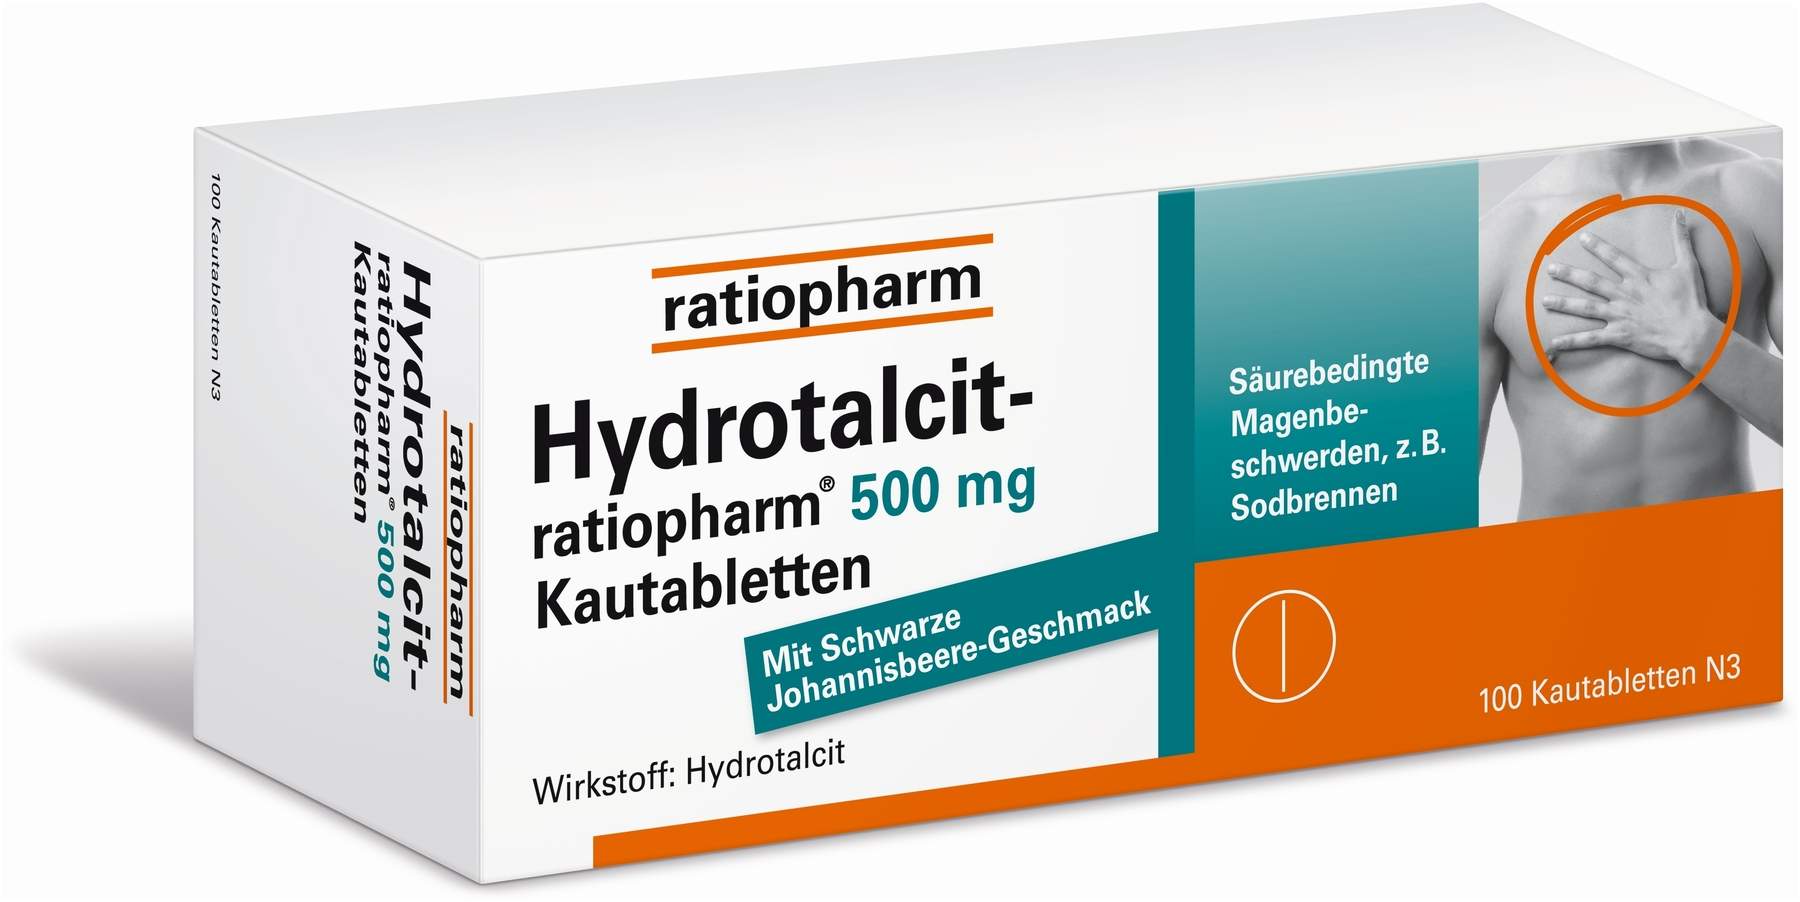 Hydrotalcit-ratiopharm 500 mg 100 Kautabletten kaufen Volksversand Versanda...